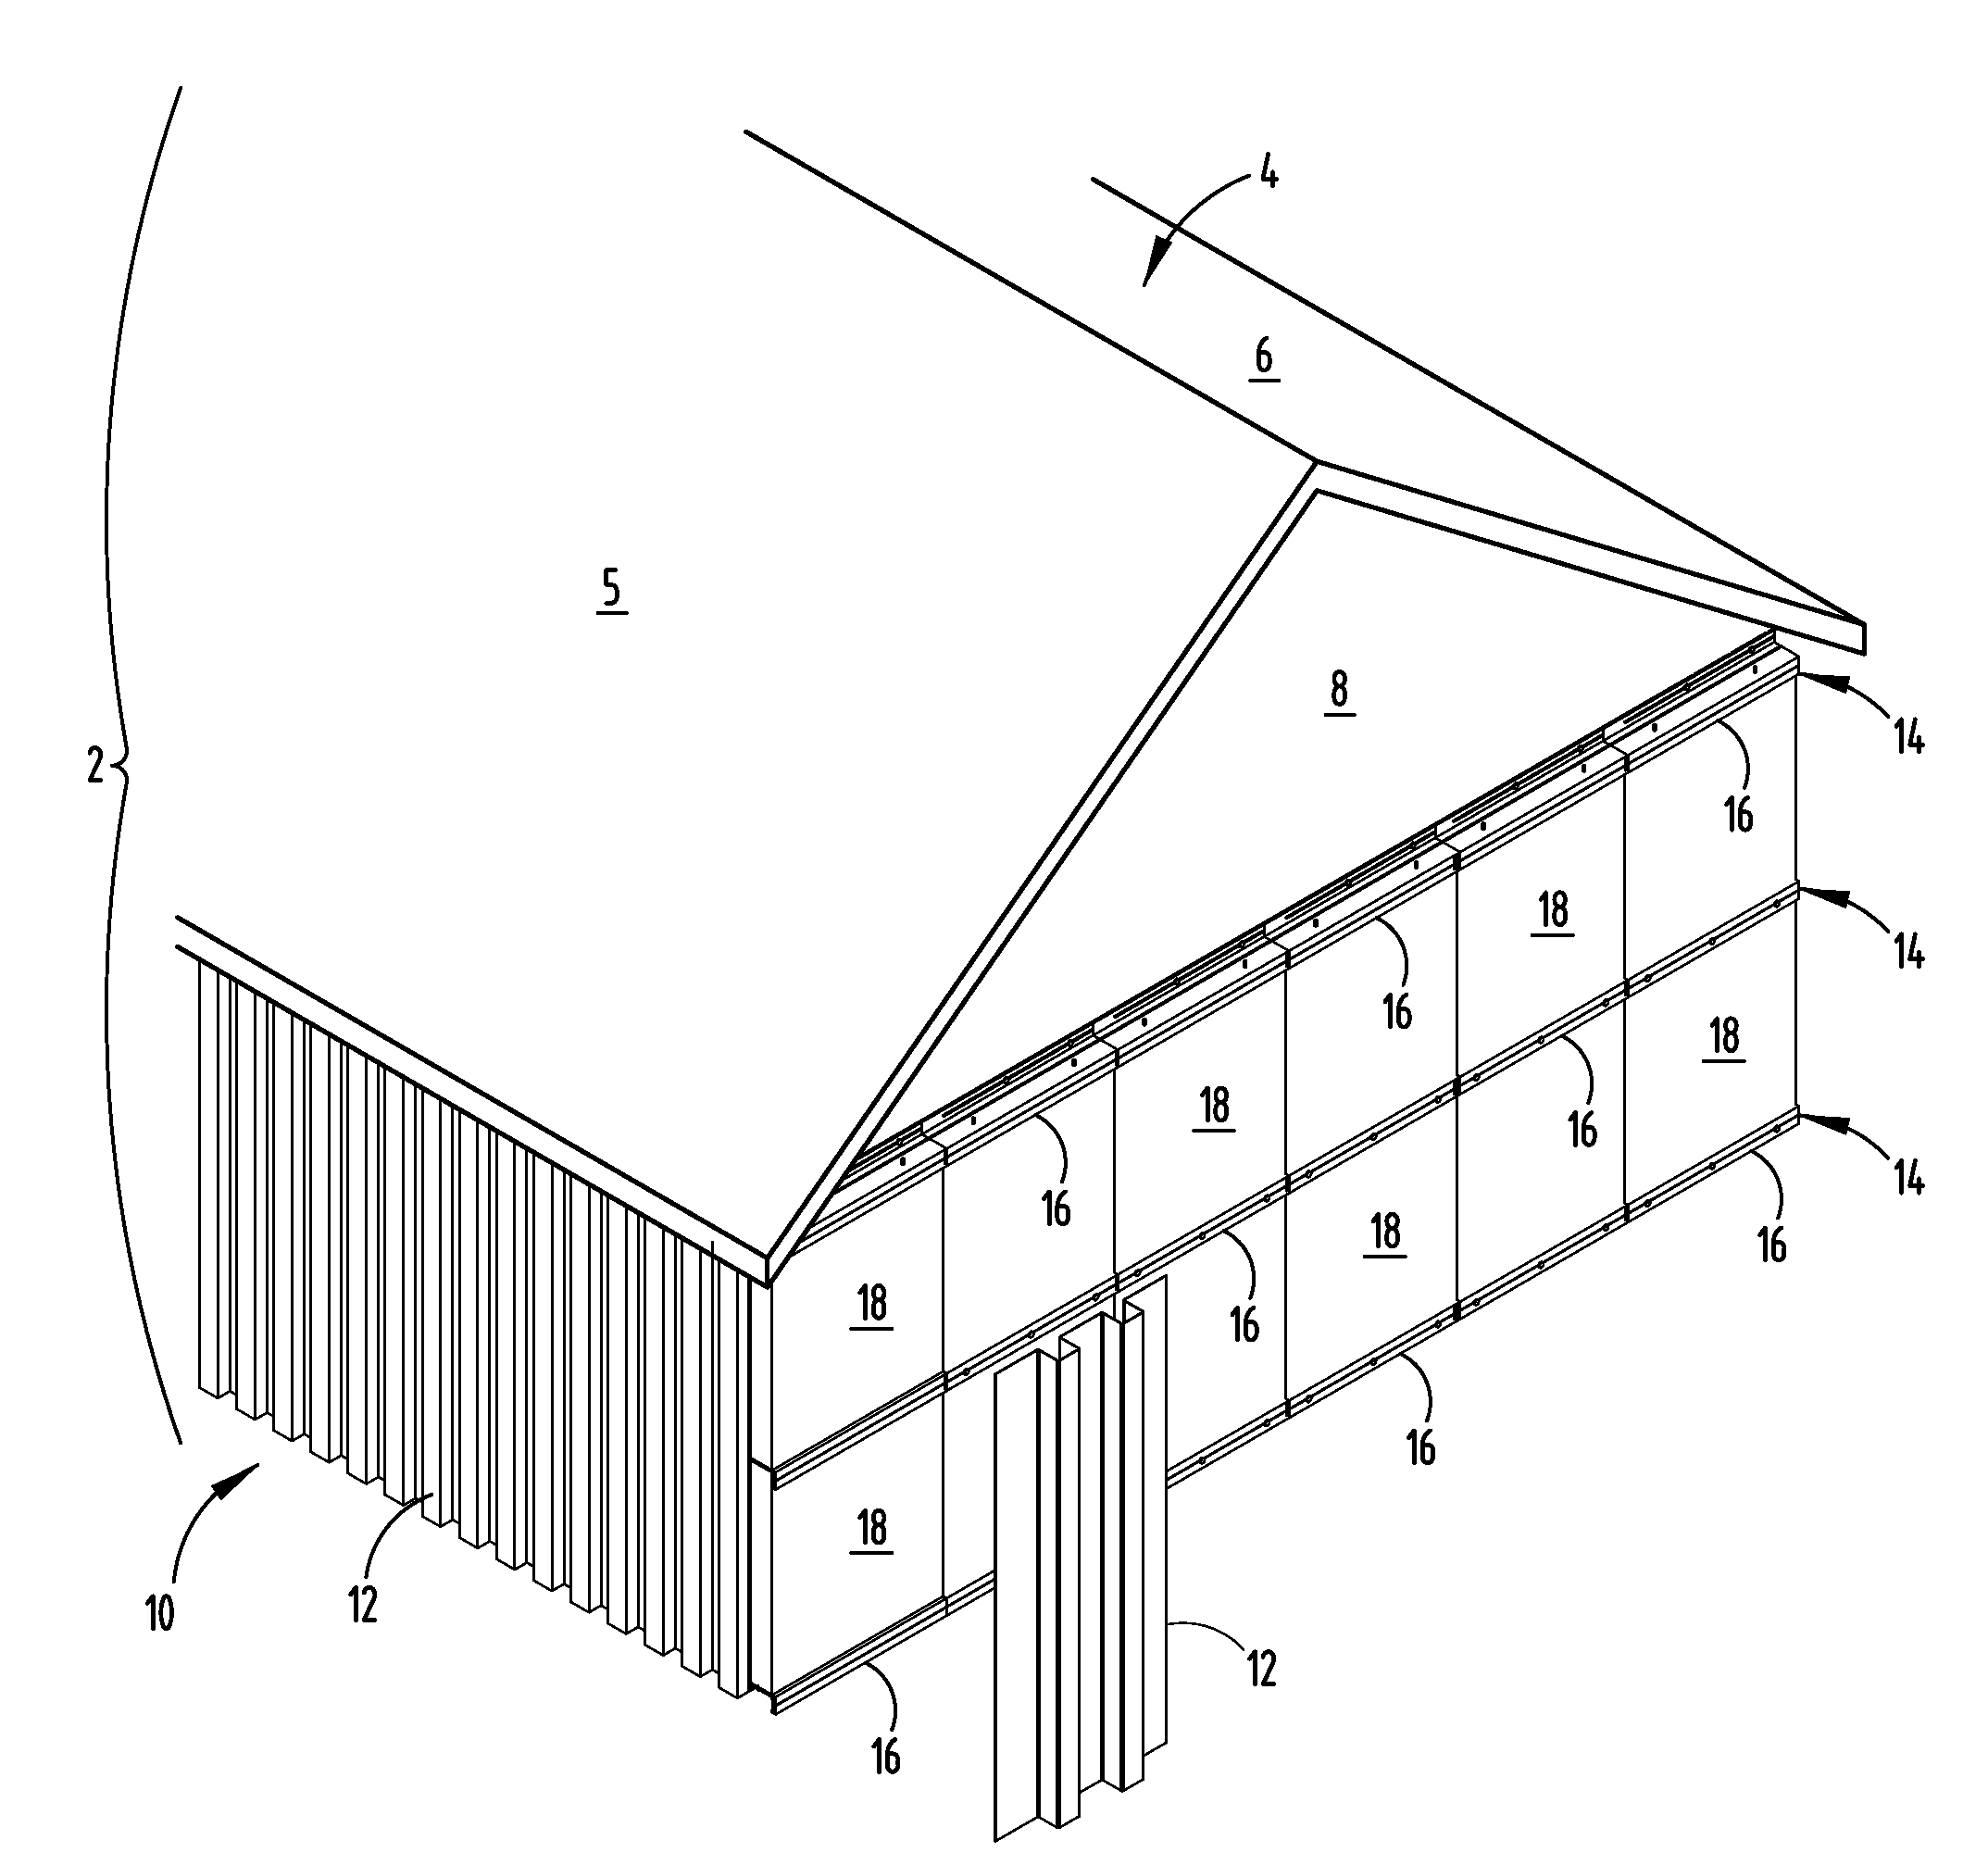 Polymer-based bracket system for exterior cladding